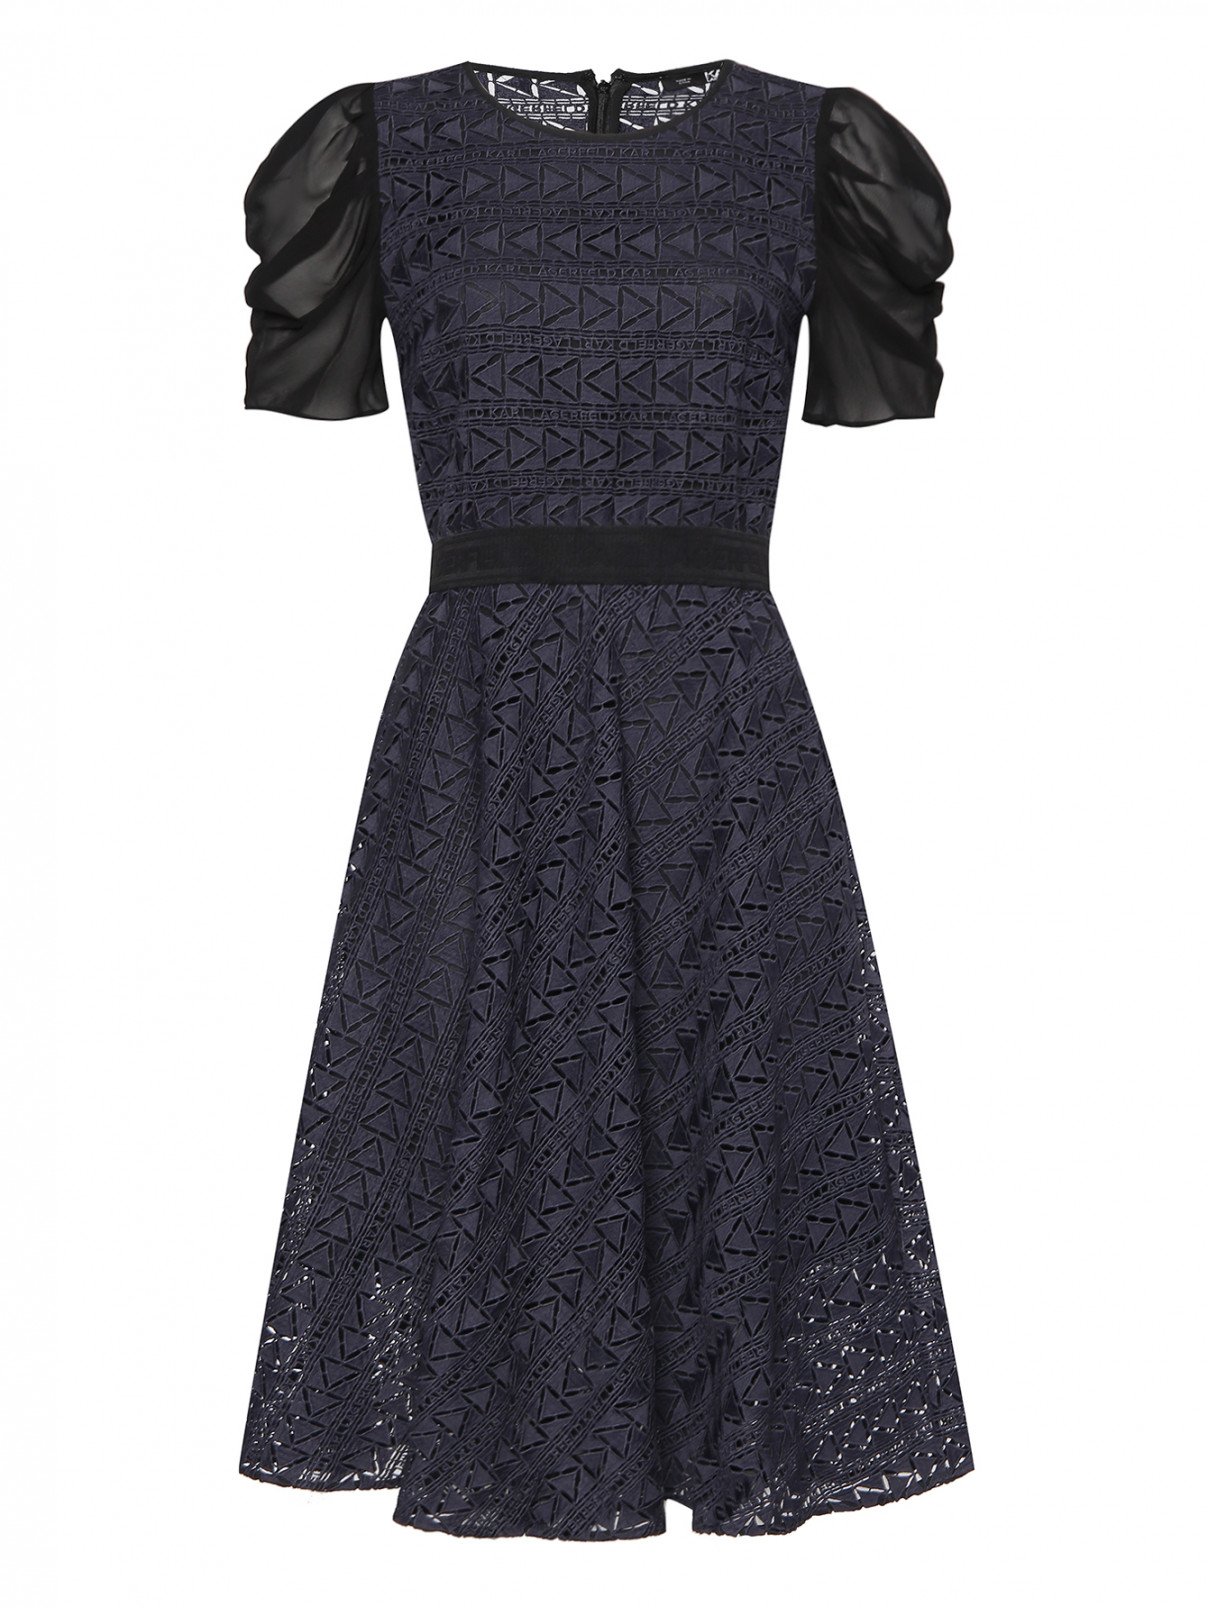 Платье ажурное из вискозы Karl Lagerfeld  –  Общий вид  – Цвет:  Синий